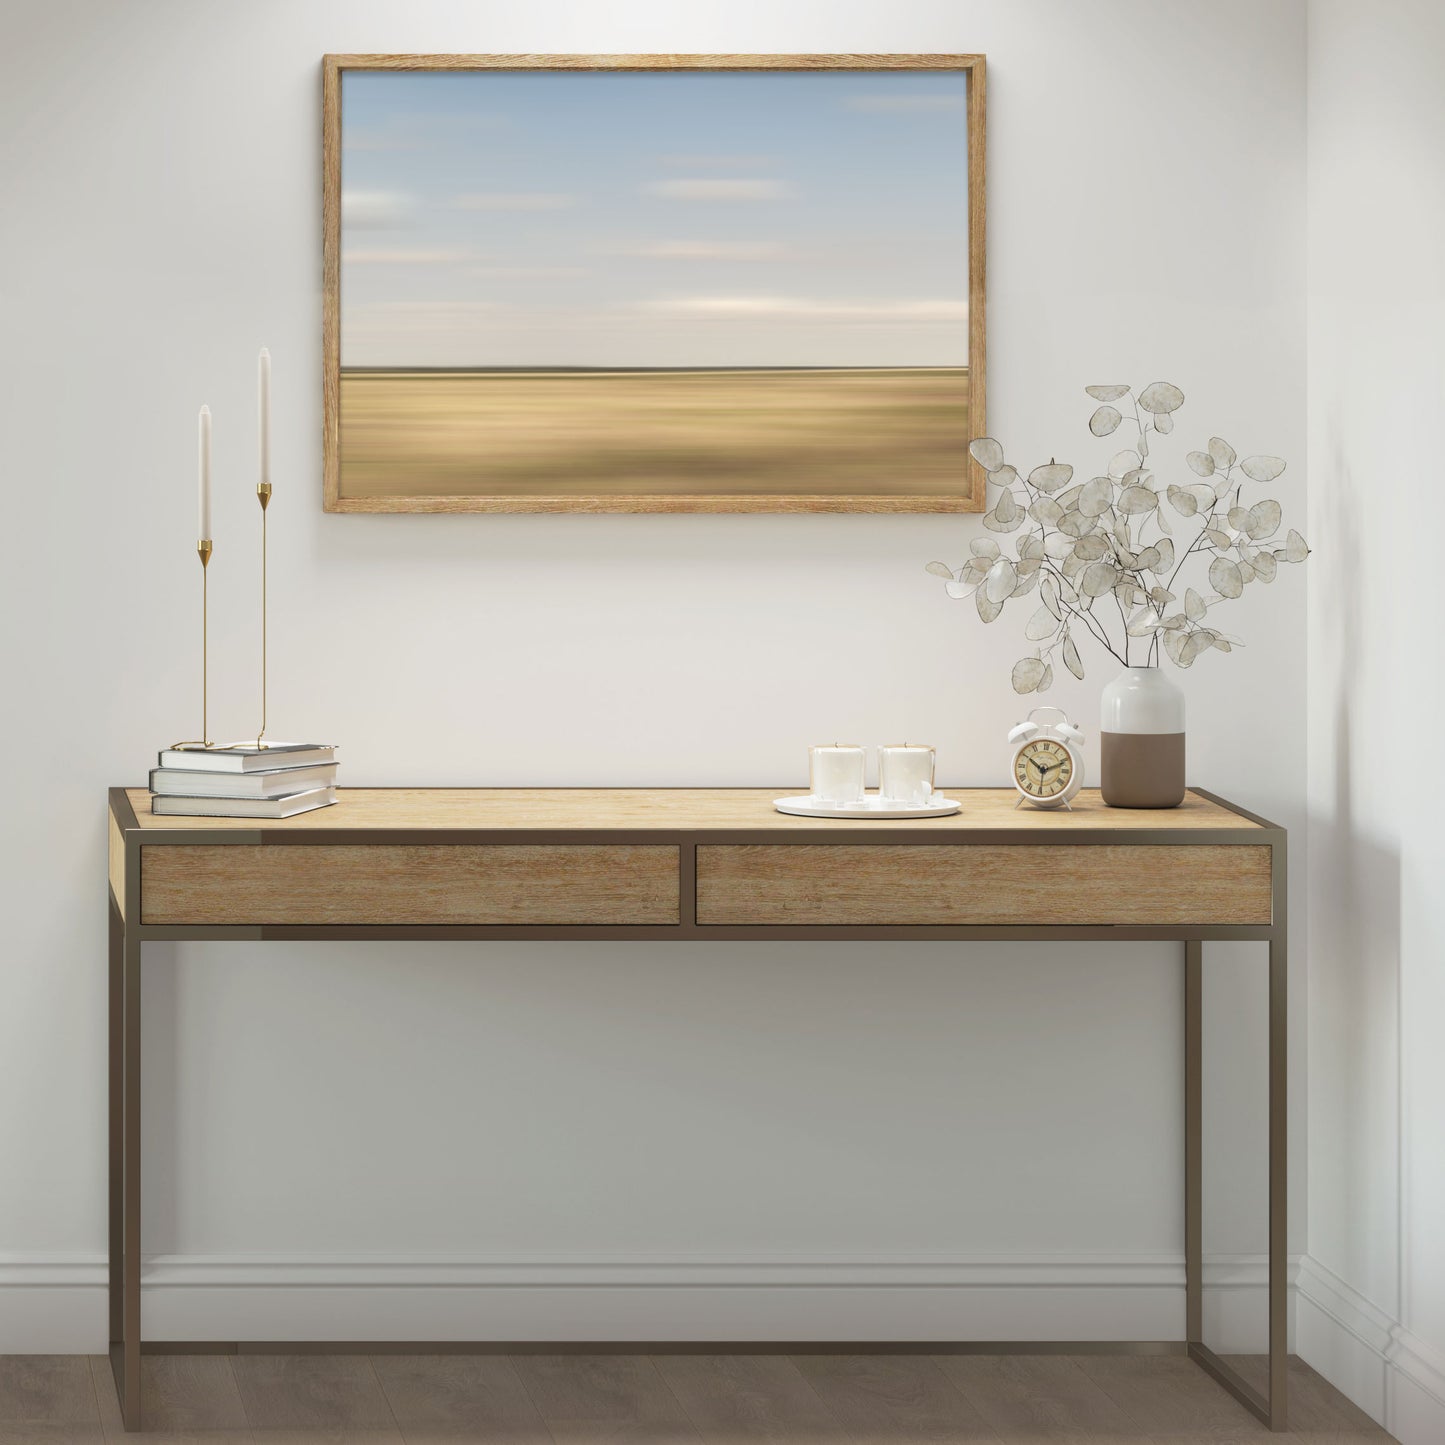 Fine art photography print presenting an abstract interpretation of a prairie scene, ideal for modern home decor.